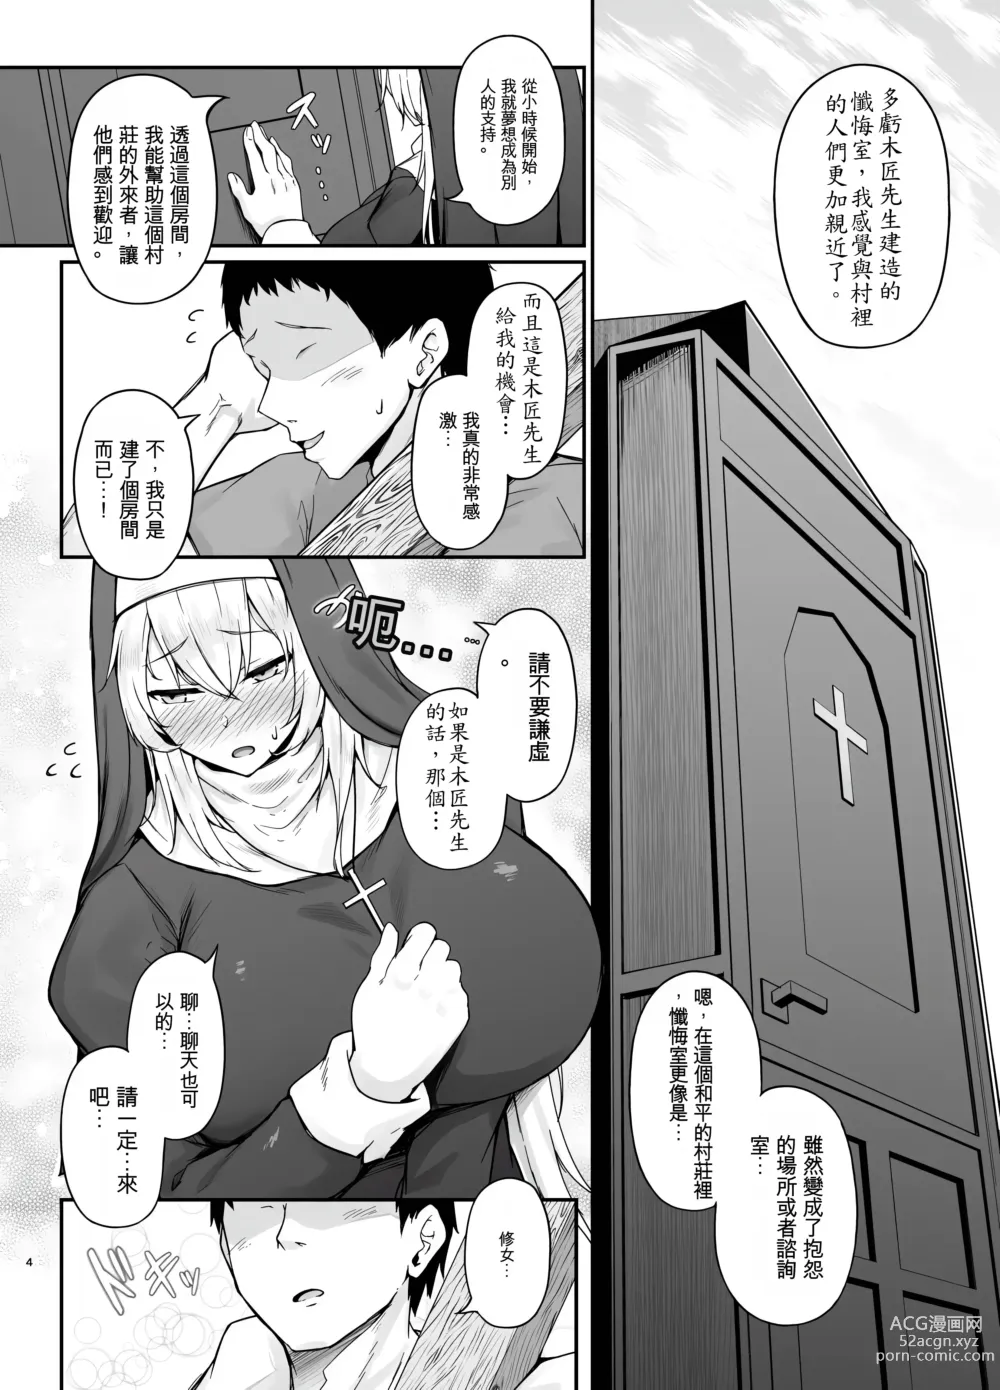 Page 3 of doujinshi 你討厭沒有品味的女人嗎?